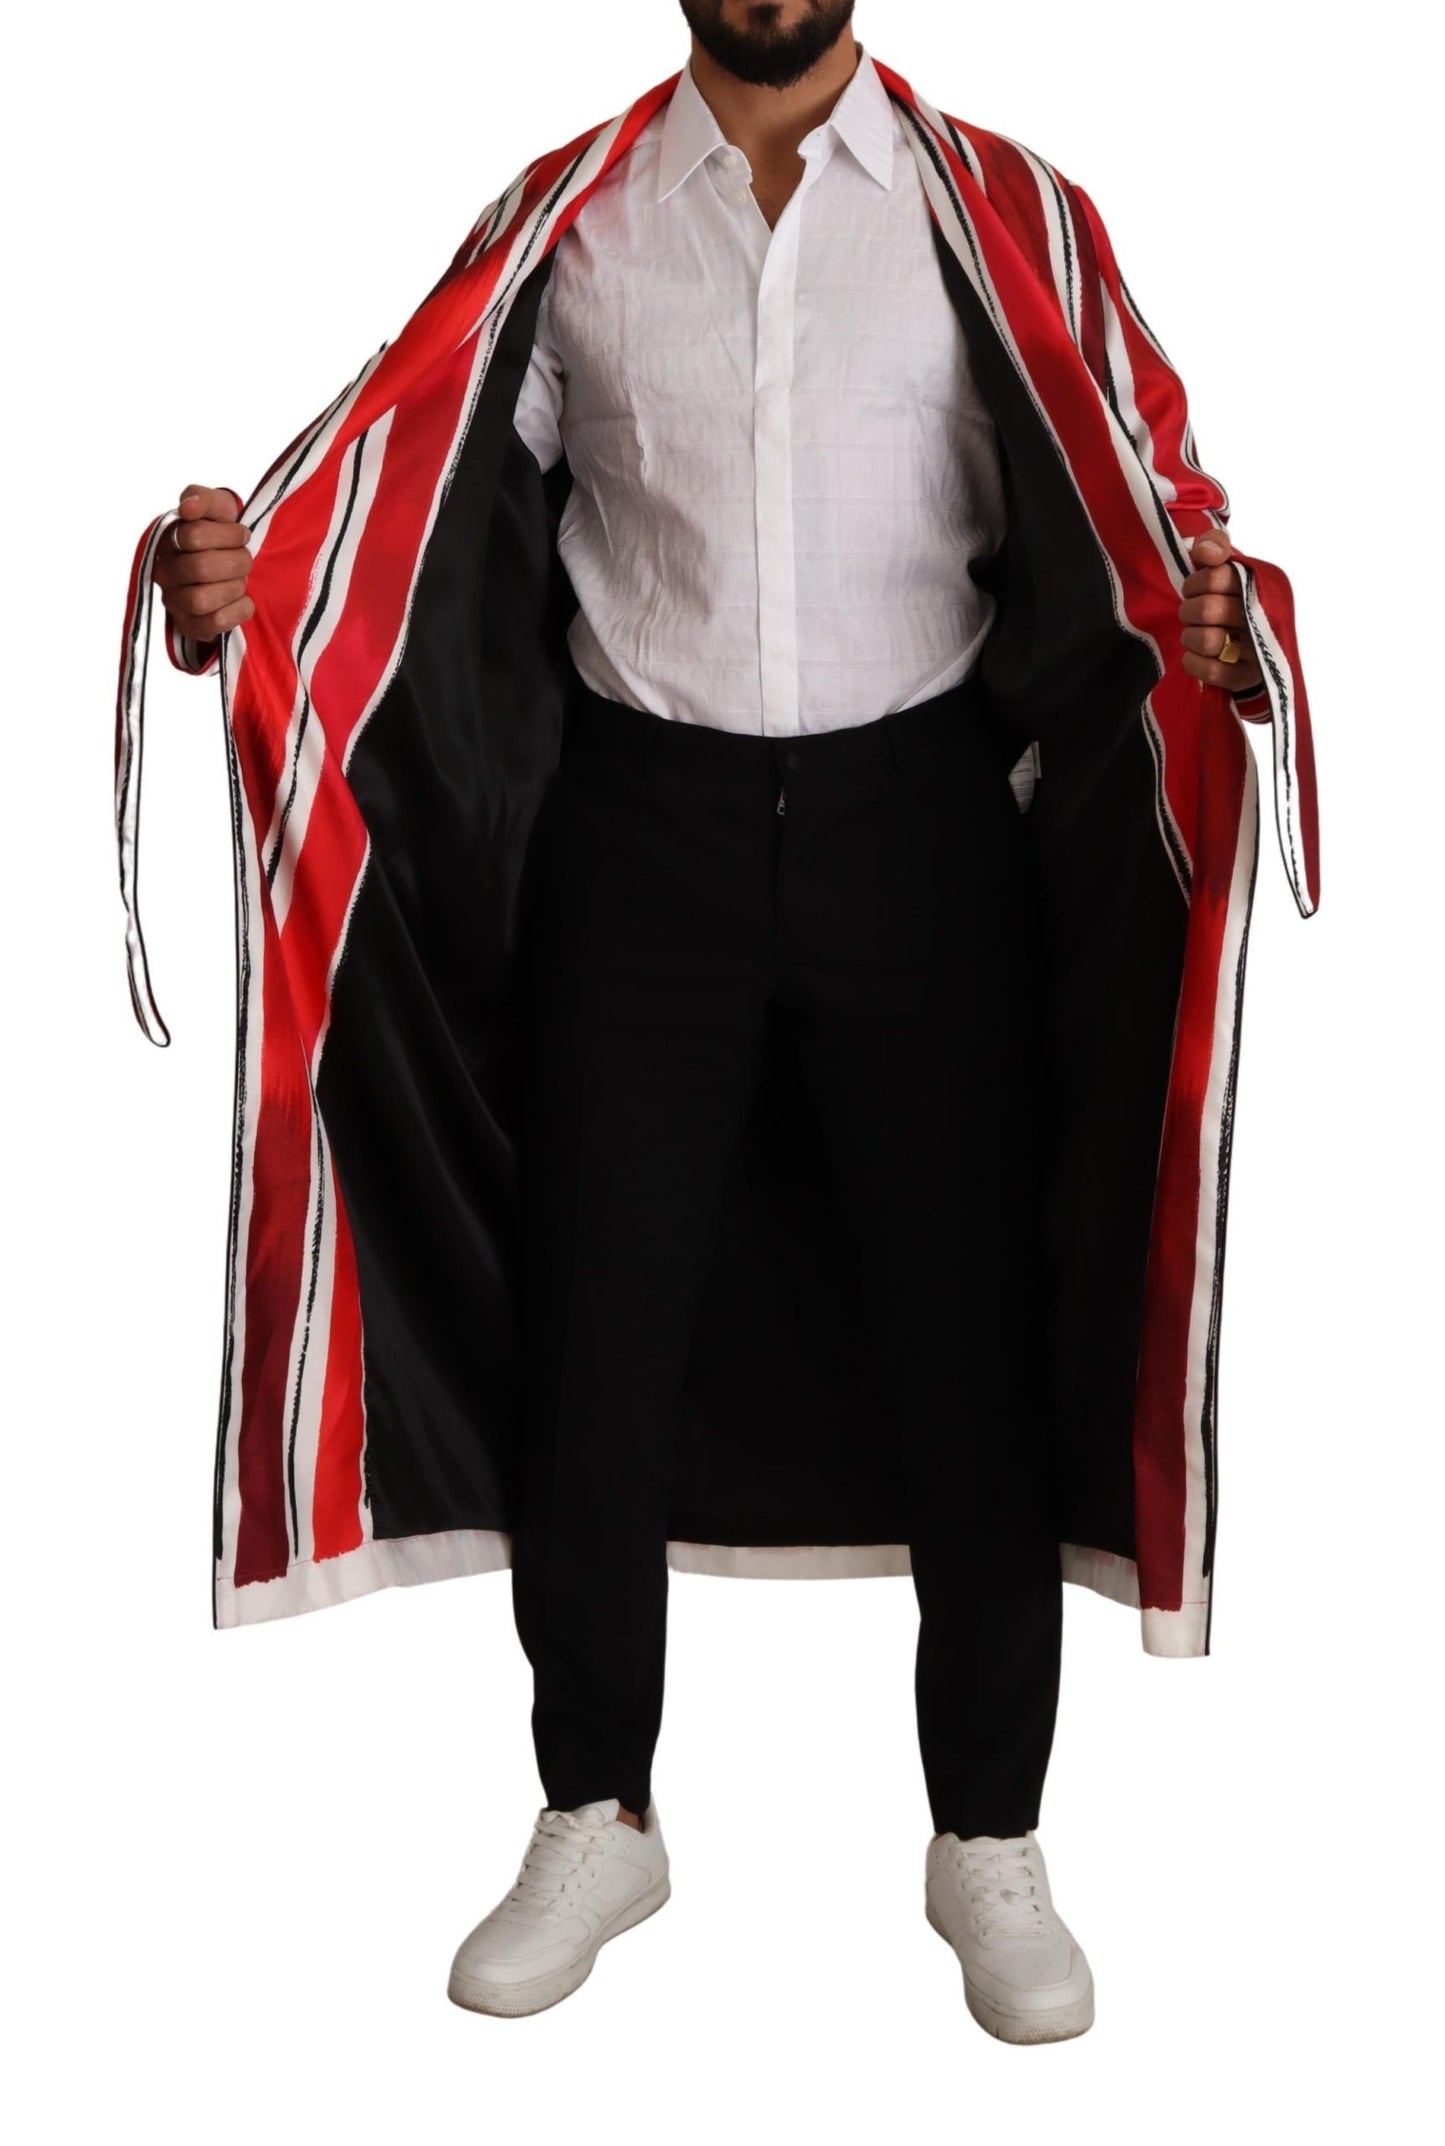 Dolce & Gabbana Red White Striped Silk Mens Robe Robe